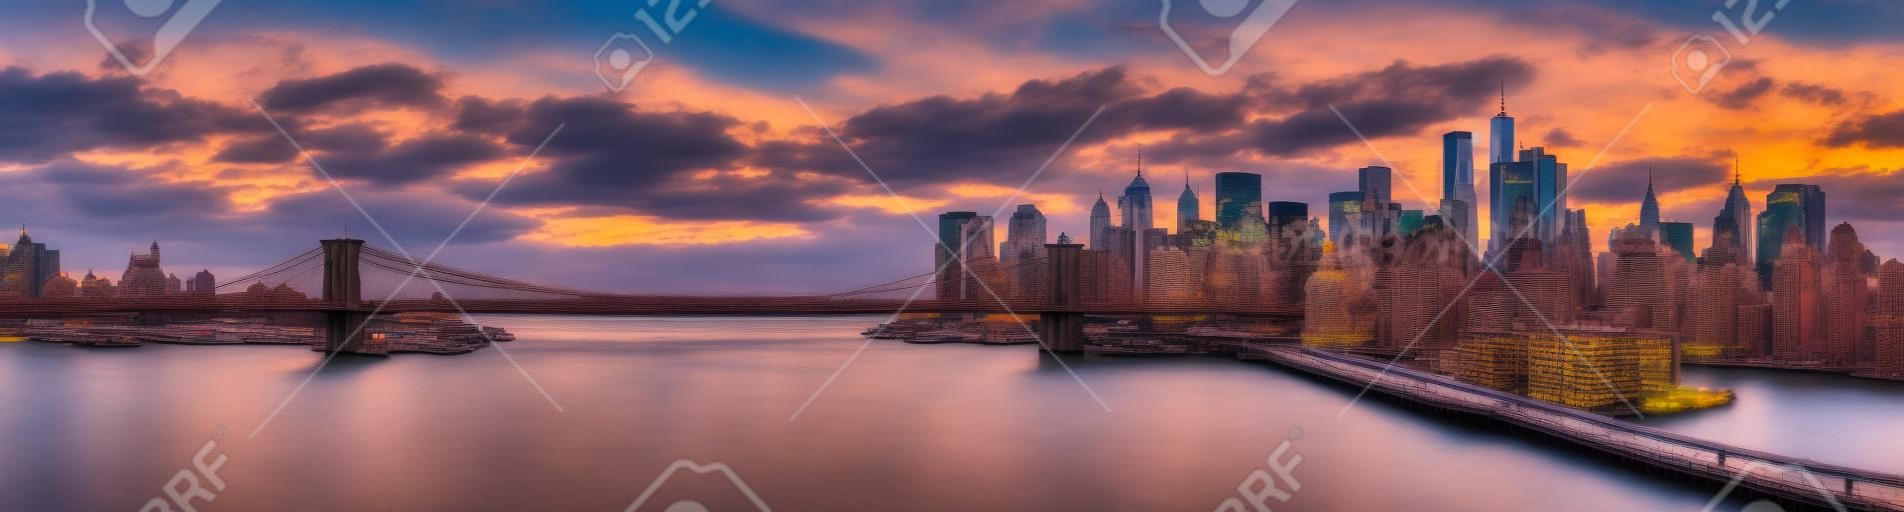 O marco icônico se estende entre o Brooklyn e o horizonte do Distrito Financeiro de Nova York, dominado pela Torre da Liberdade.